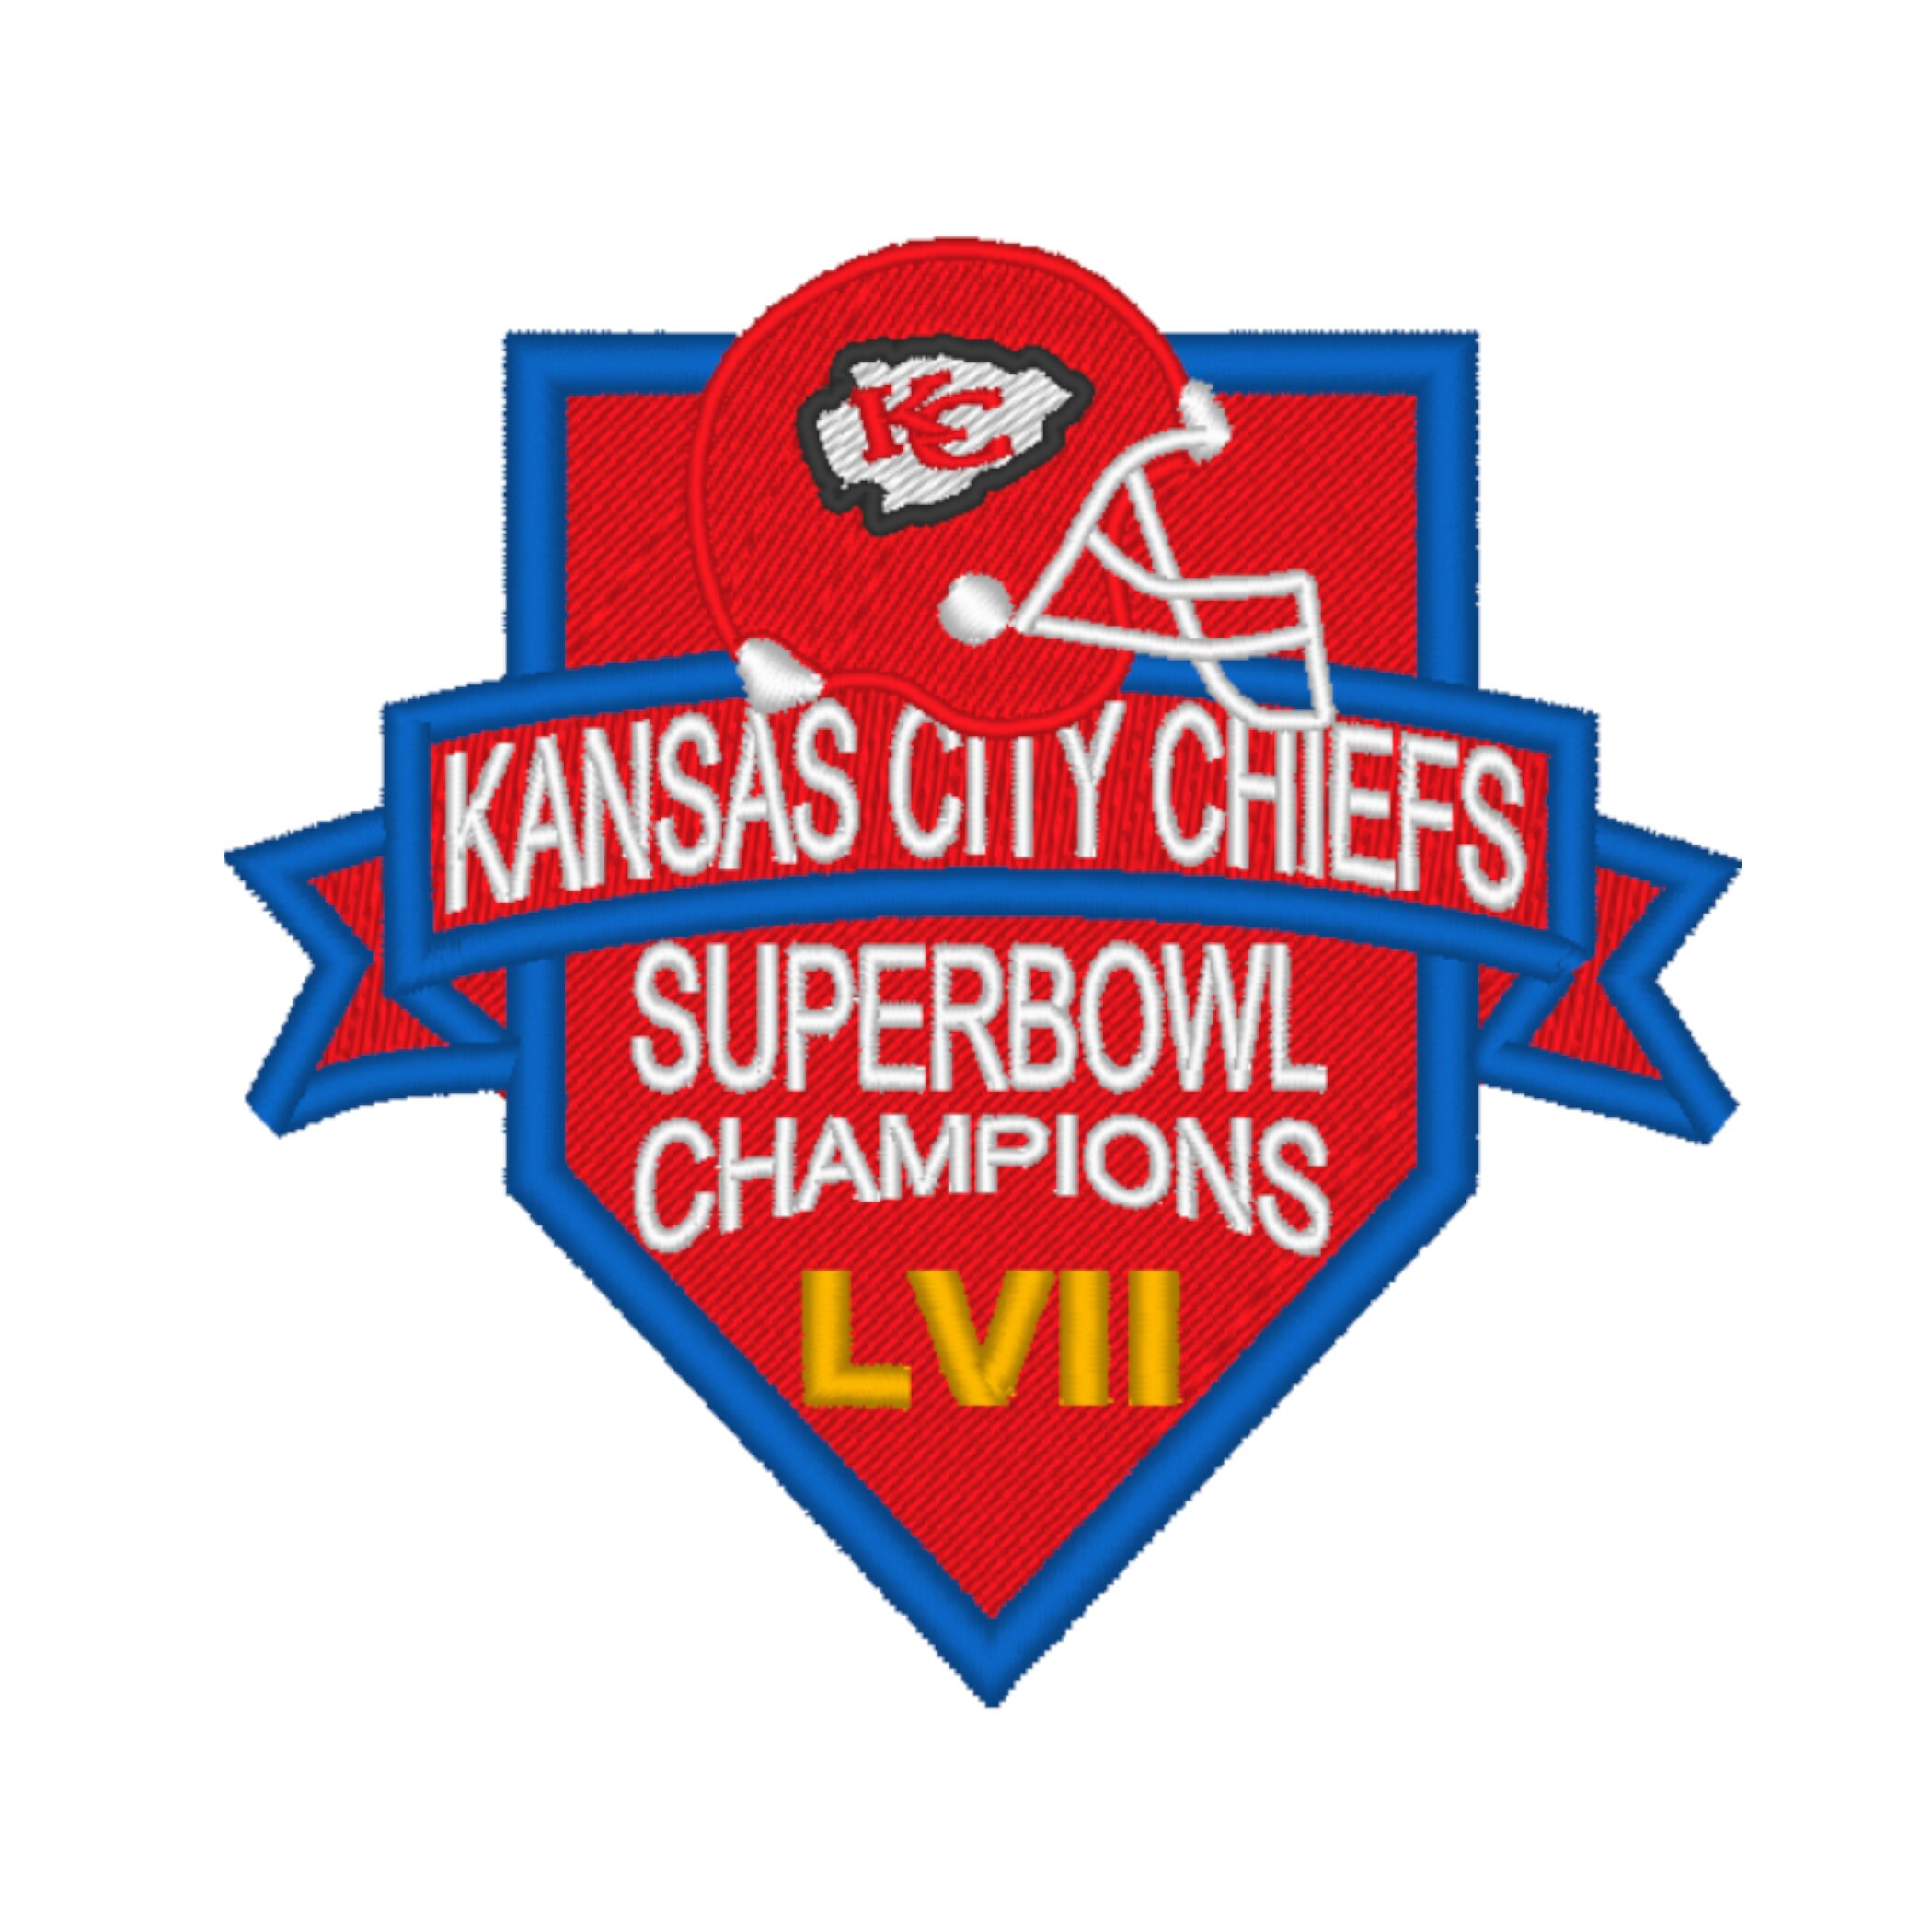 Kansas City Chiefs Super Bowl LVII Champions Glass Ball Christmas